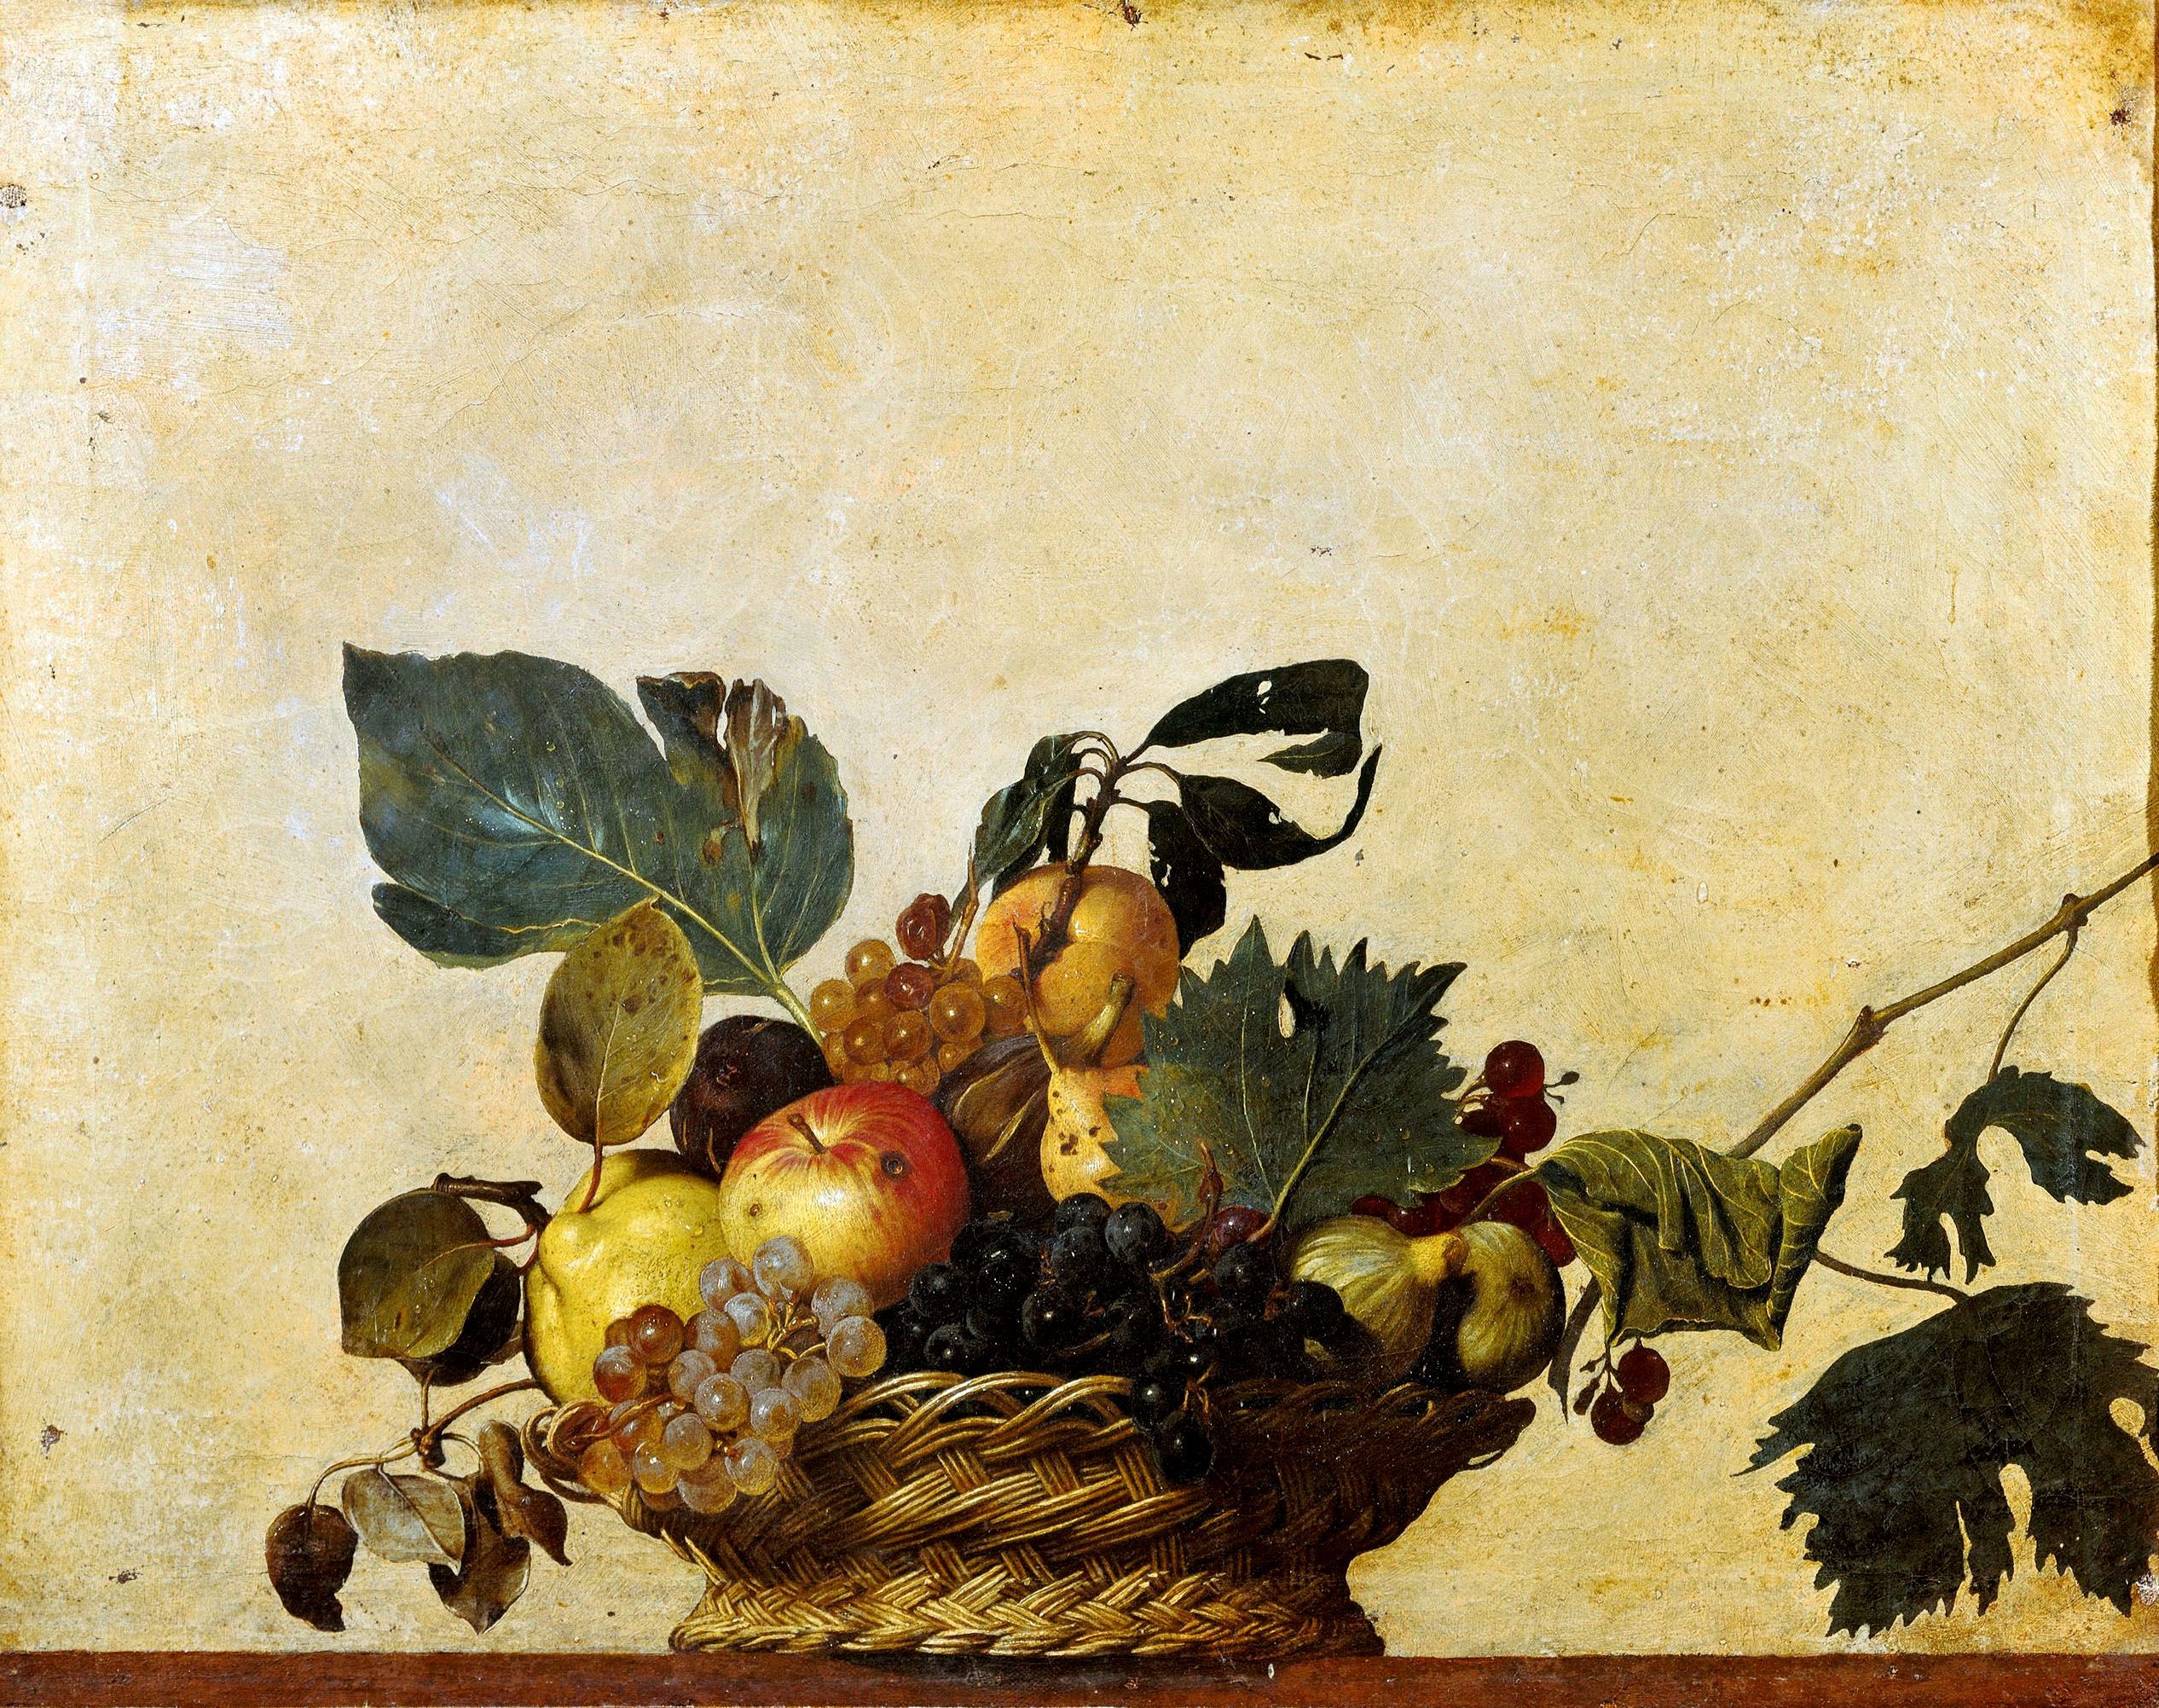 Fruitmand by Michelangelo Merisi da Caravaggio - 1610 - 47 x 60,8 cm 